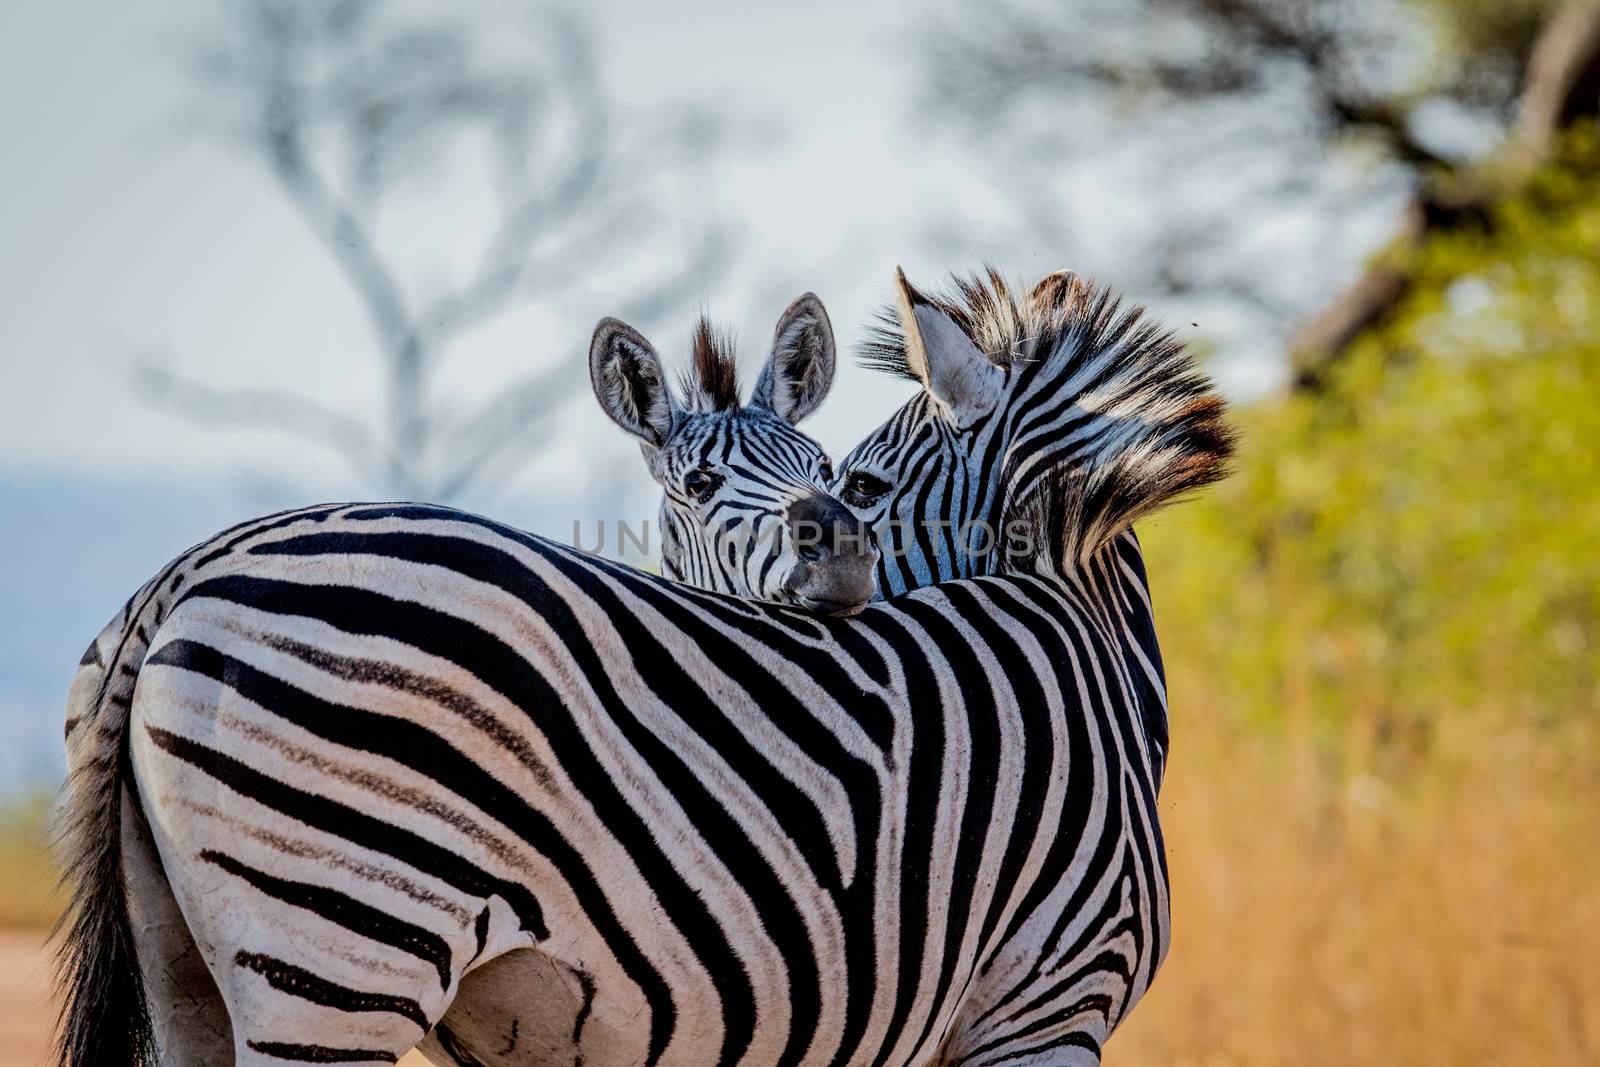 Two Zebras bonding in the Kruger National Park, South Africa.